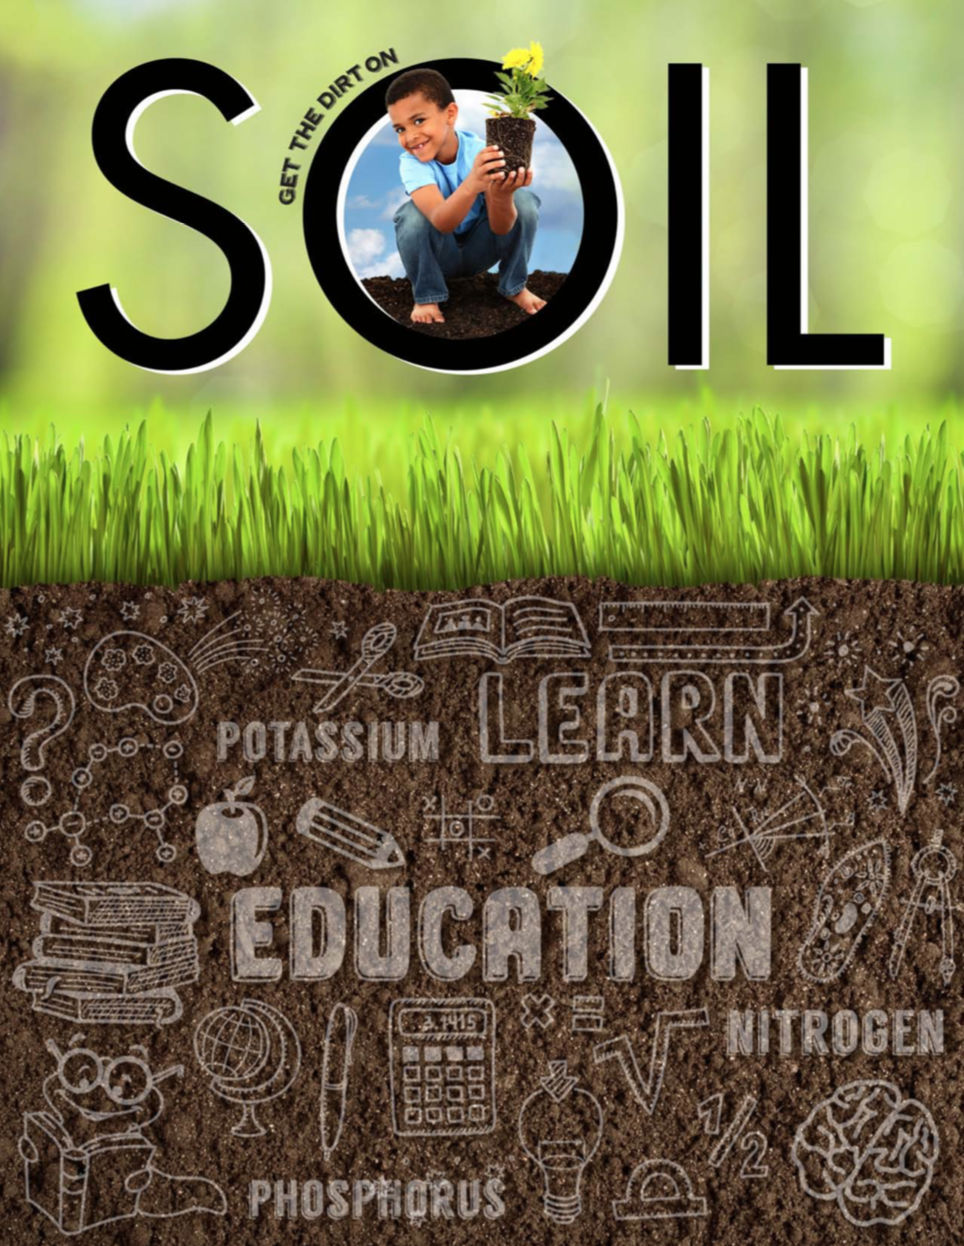 Get the Dirt on Soil reader cover